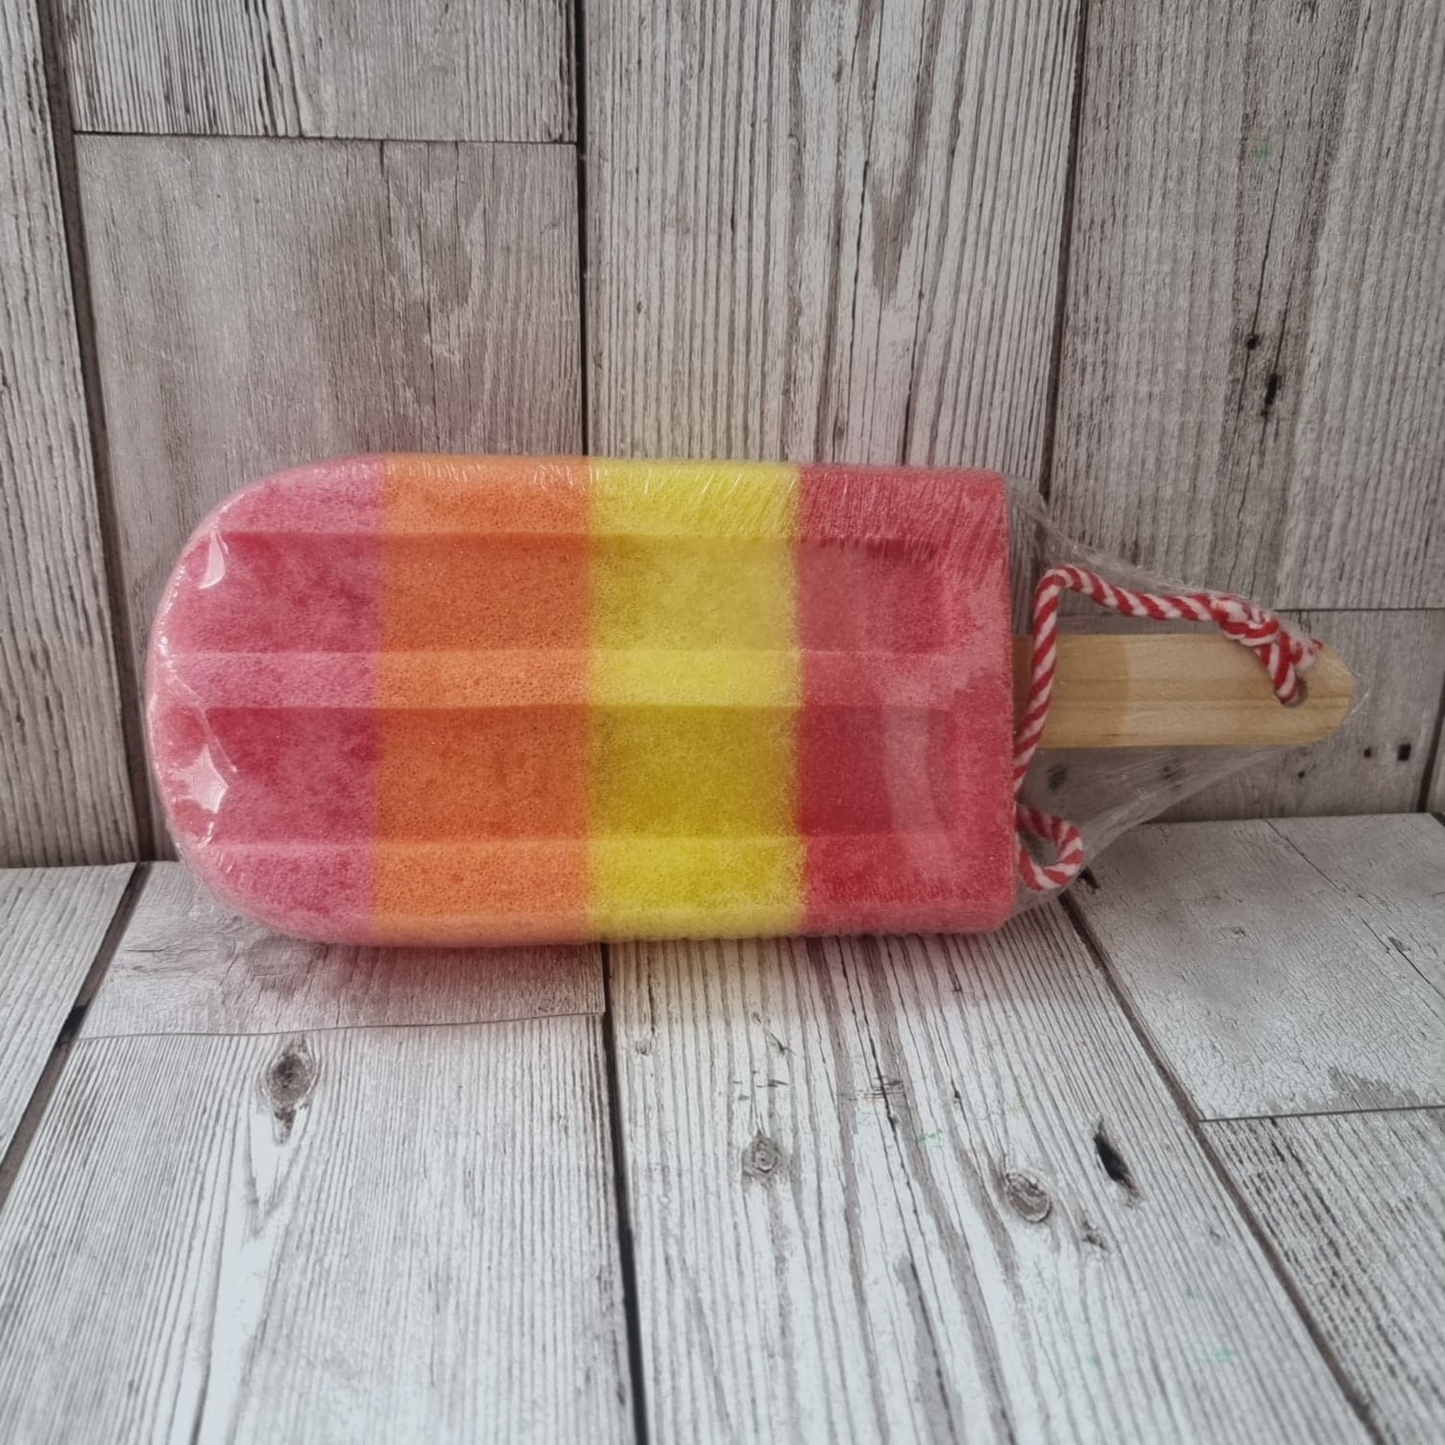 'Fruit Salad Ice Lolly' Soap Sponge